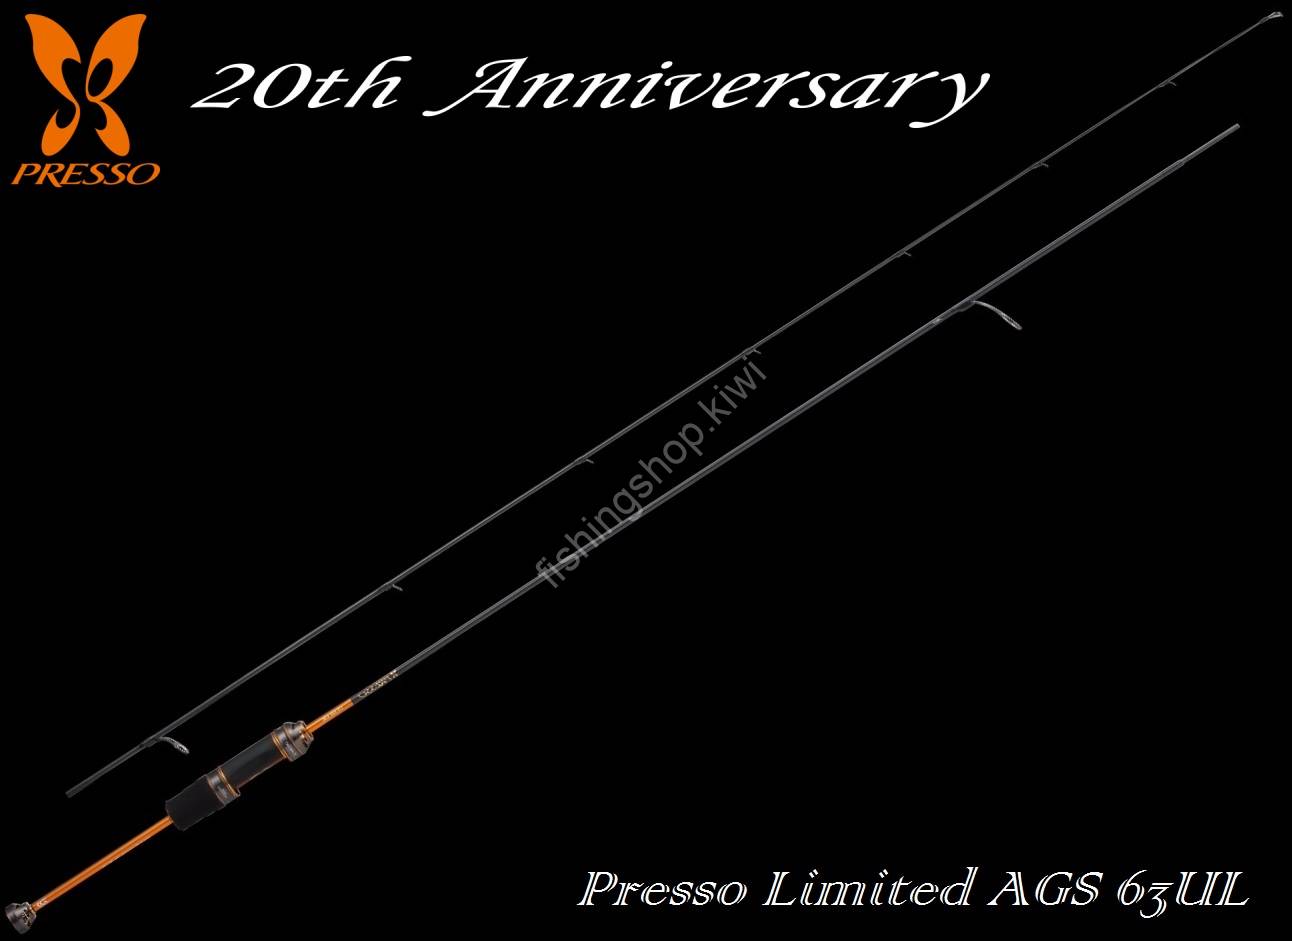 DAIWA Presso Limited AGS 63UL 20th Anniversary